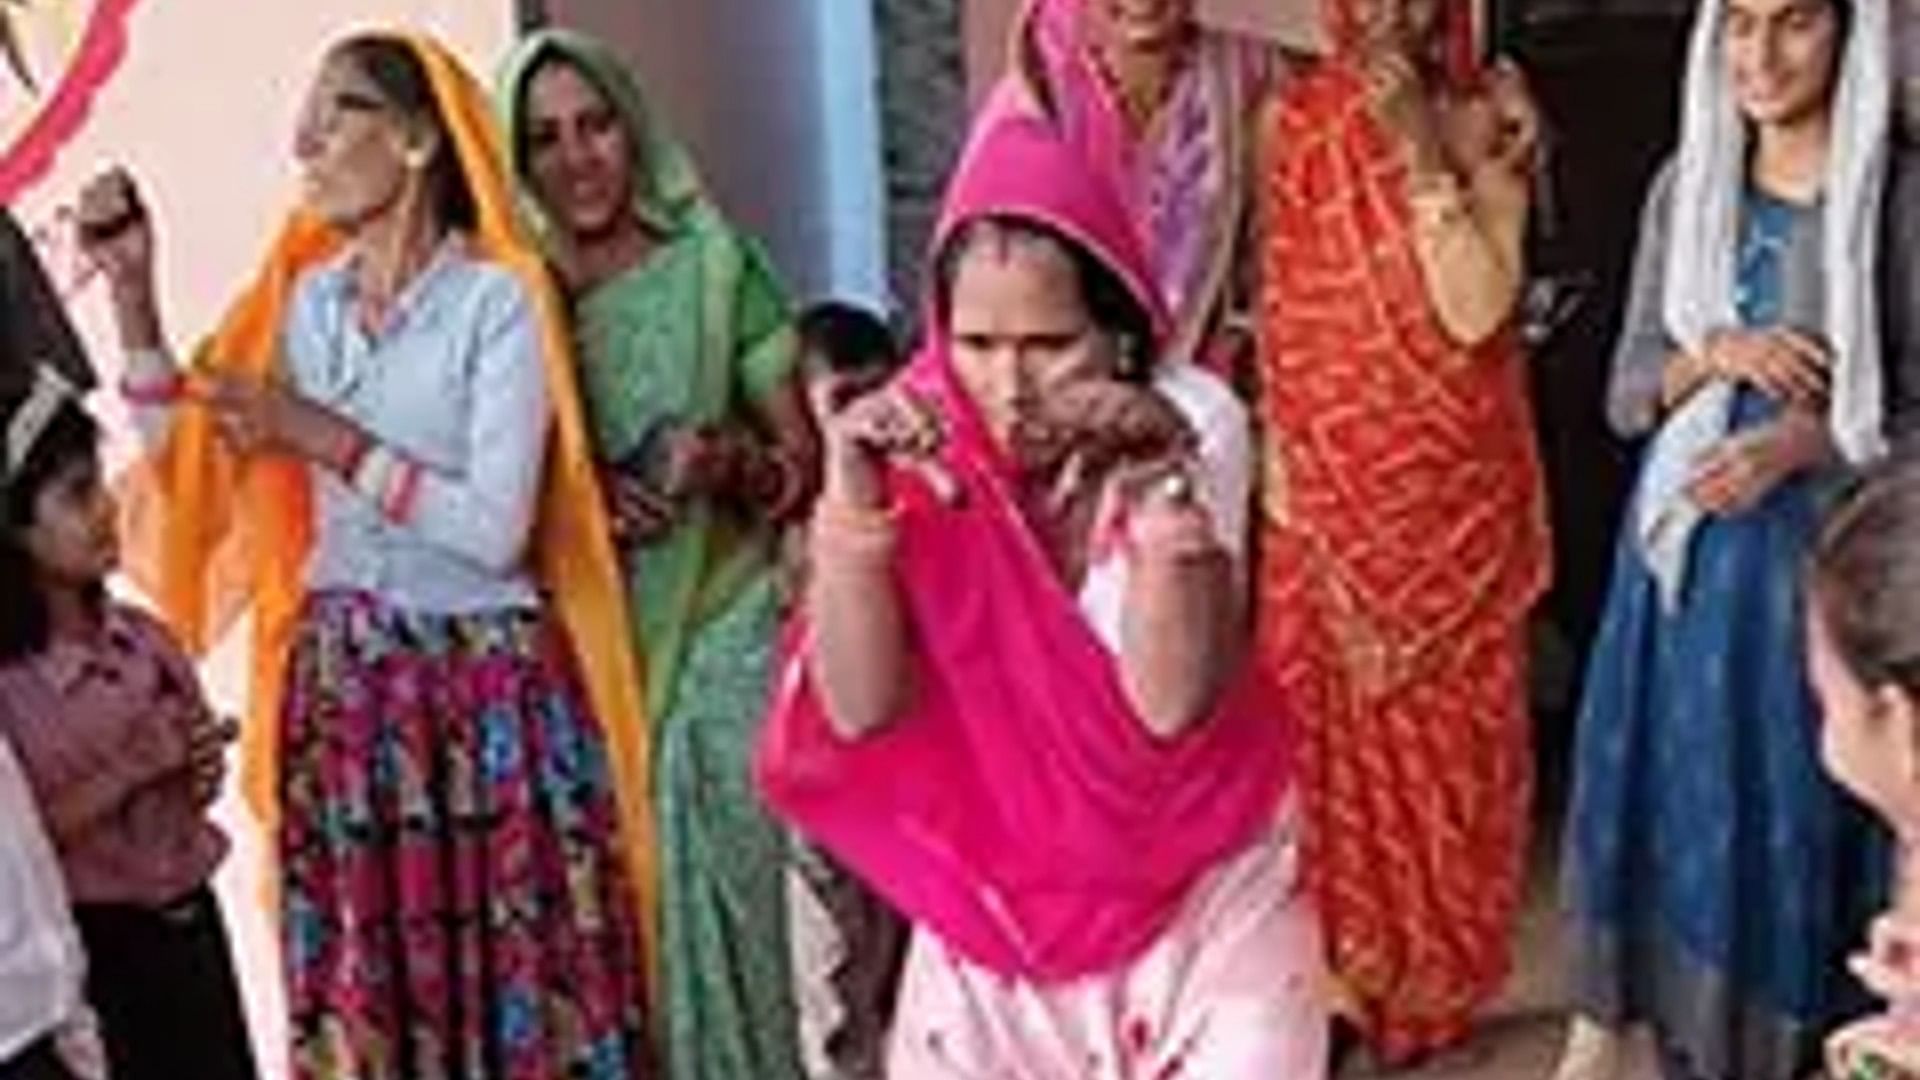 Aunty Ka Murga Dance Video: murga dance went viral on social media